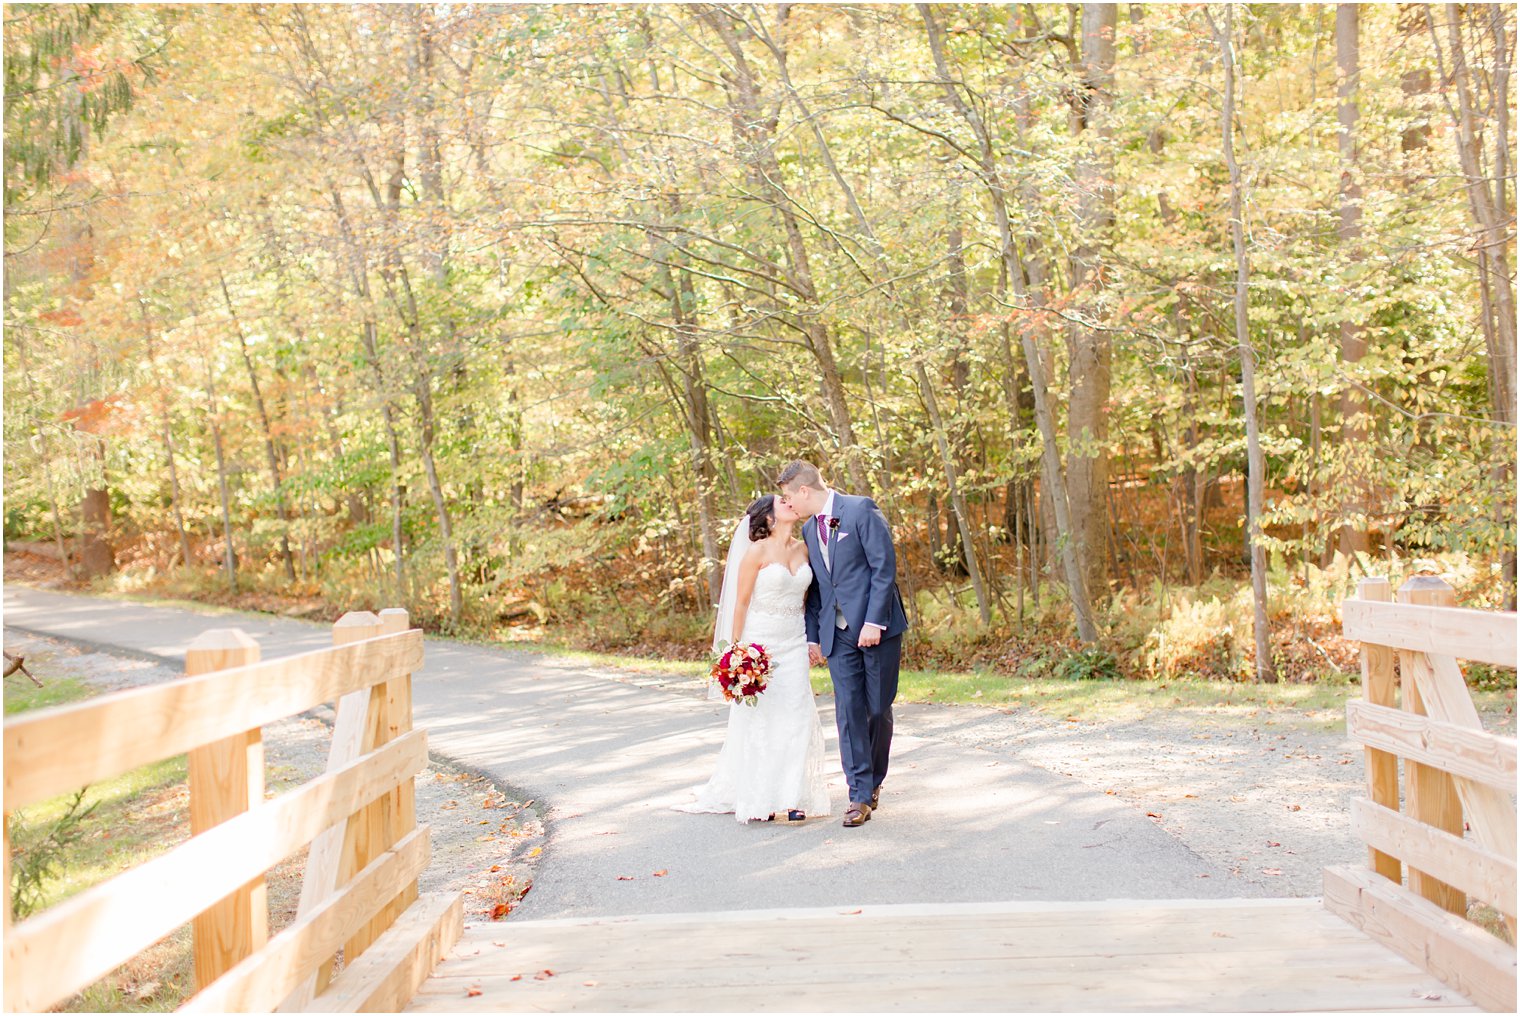 Bride and groom walking on wedding day | Photos by NJ Wedding Photographers Idalia Photography